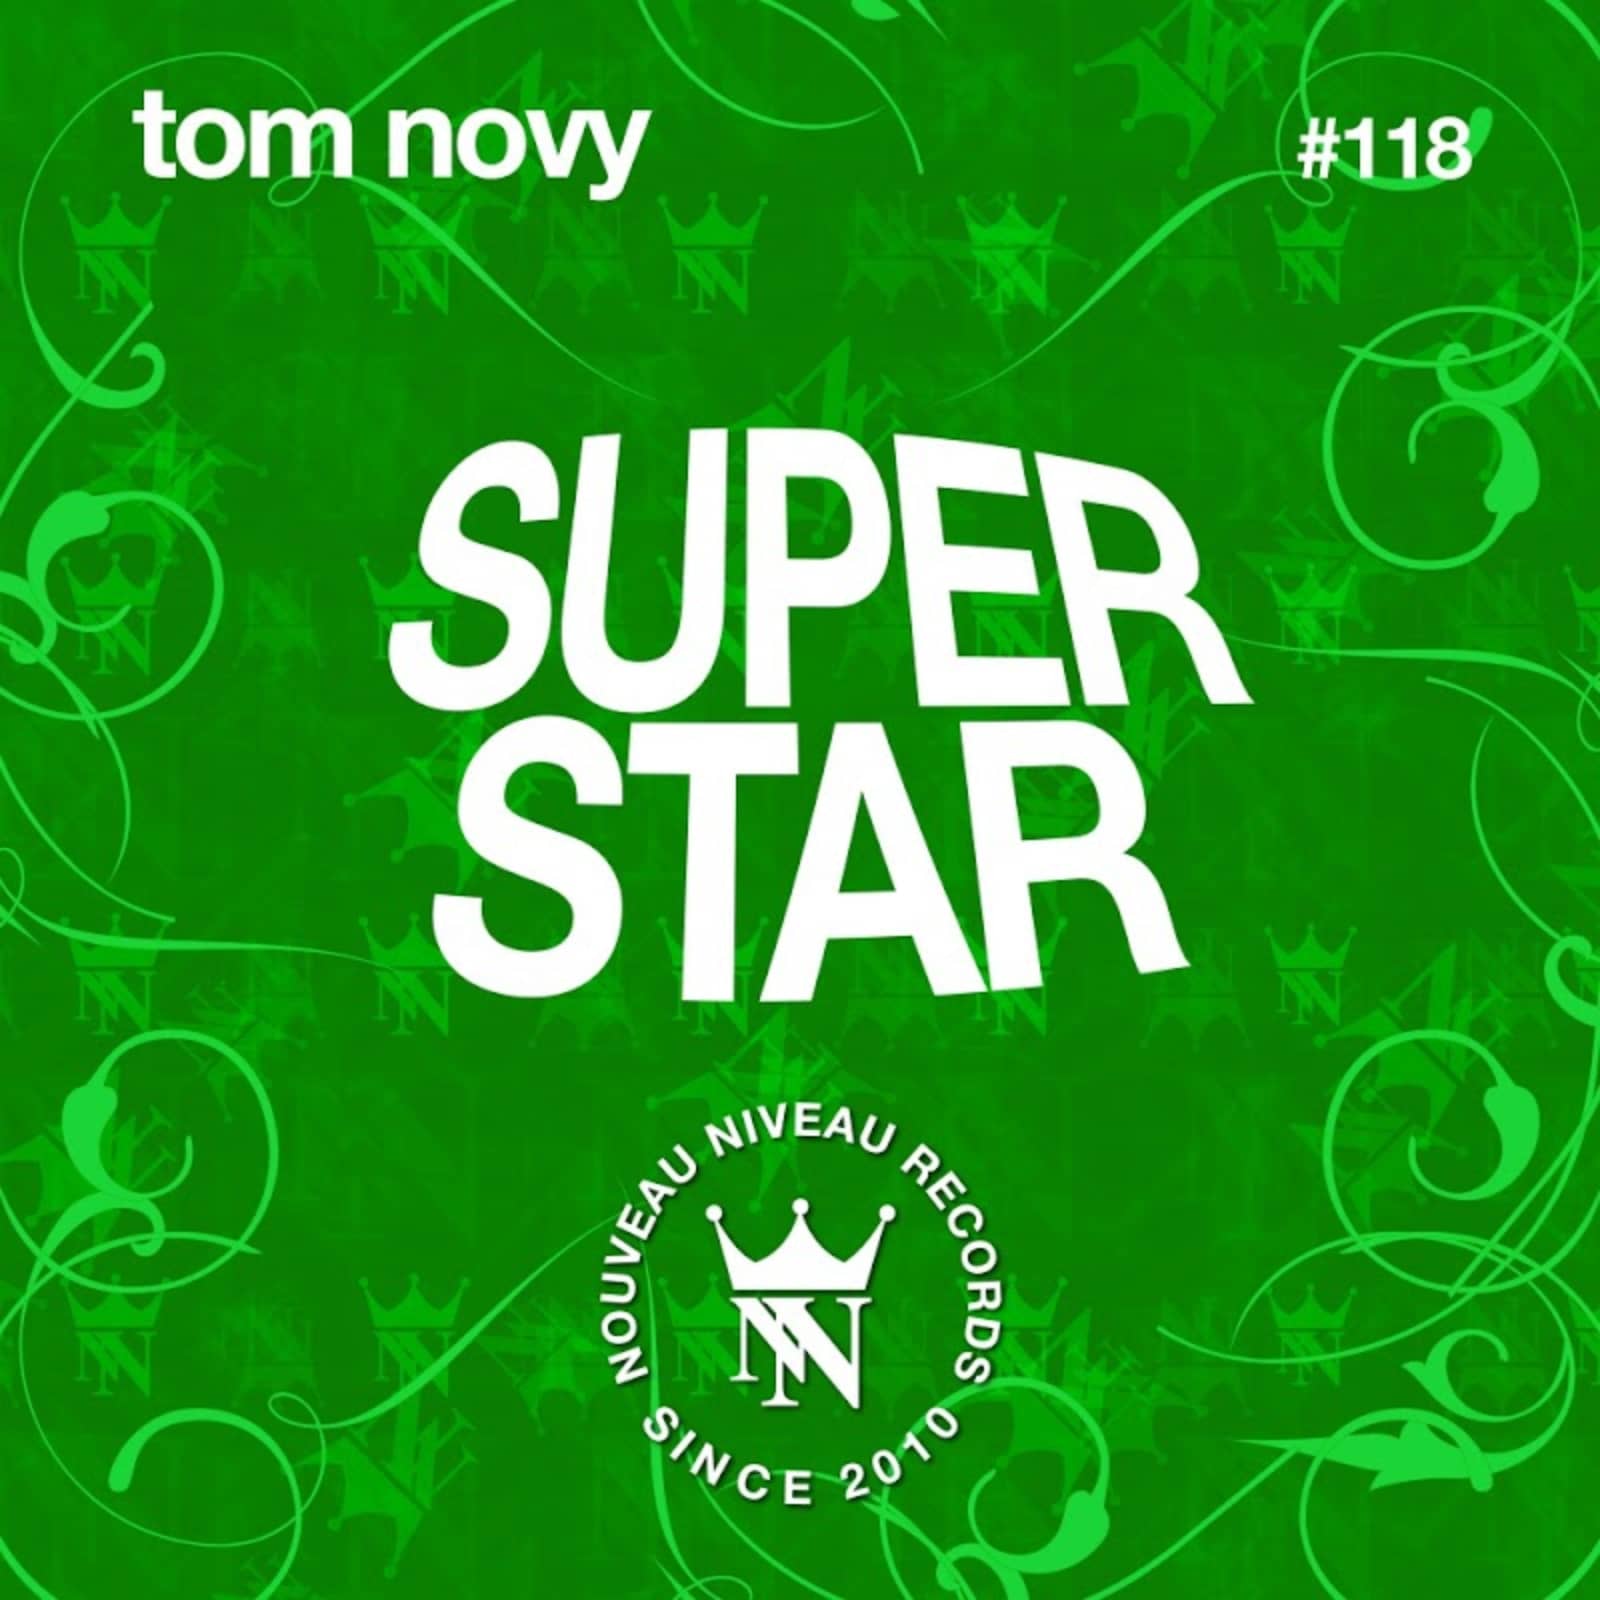 Tom novy. Tom novy - Superstar. Tom novy Dance the way i feel. Tom novy & Morgenroth - creator.